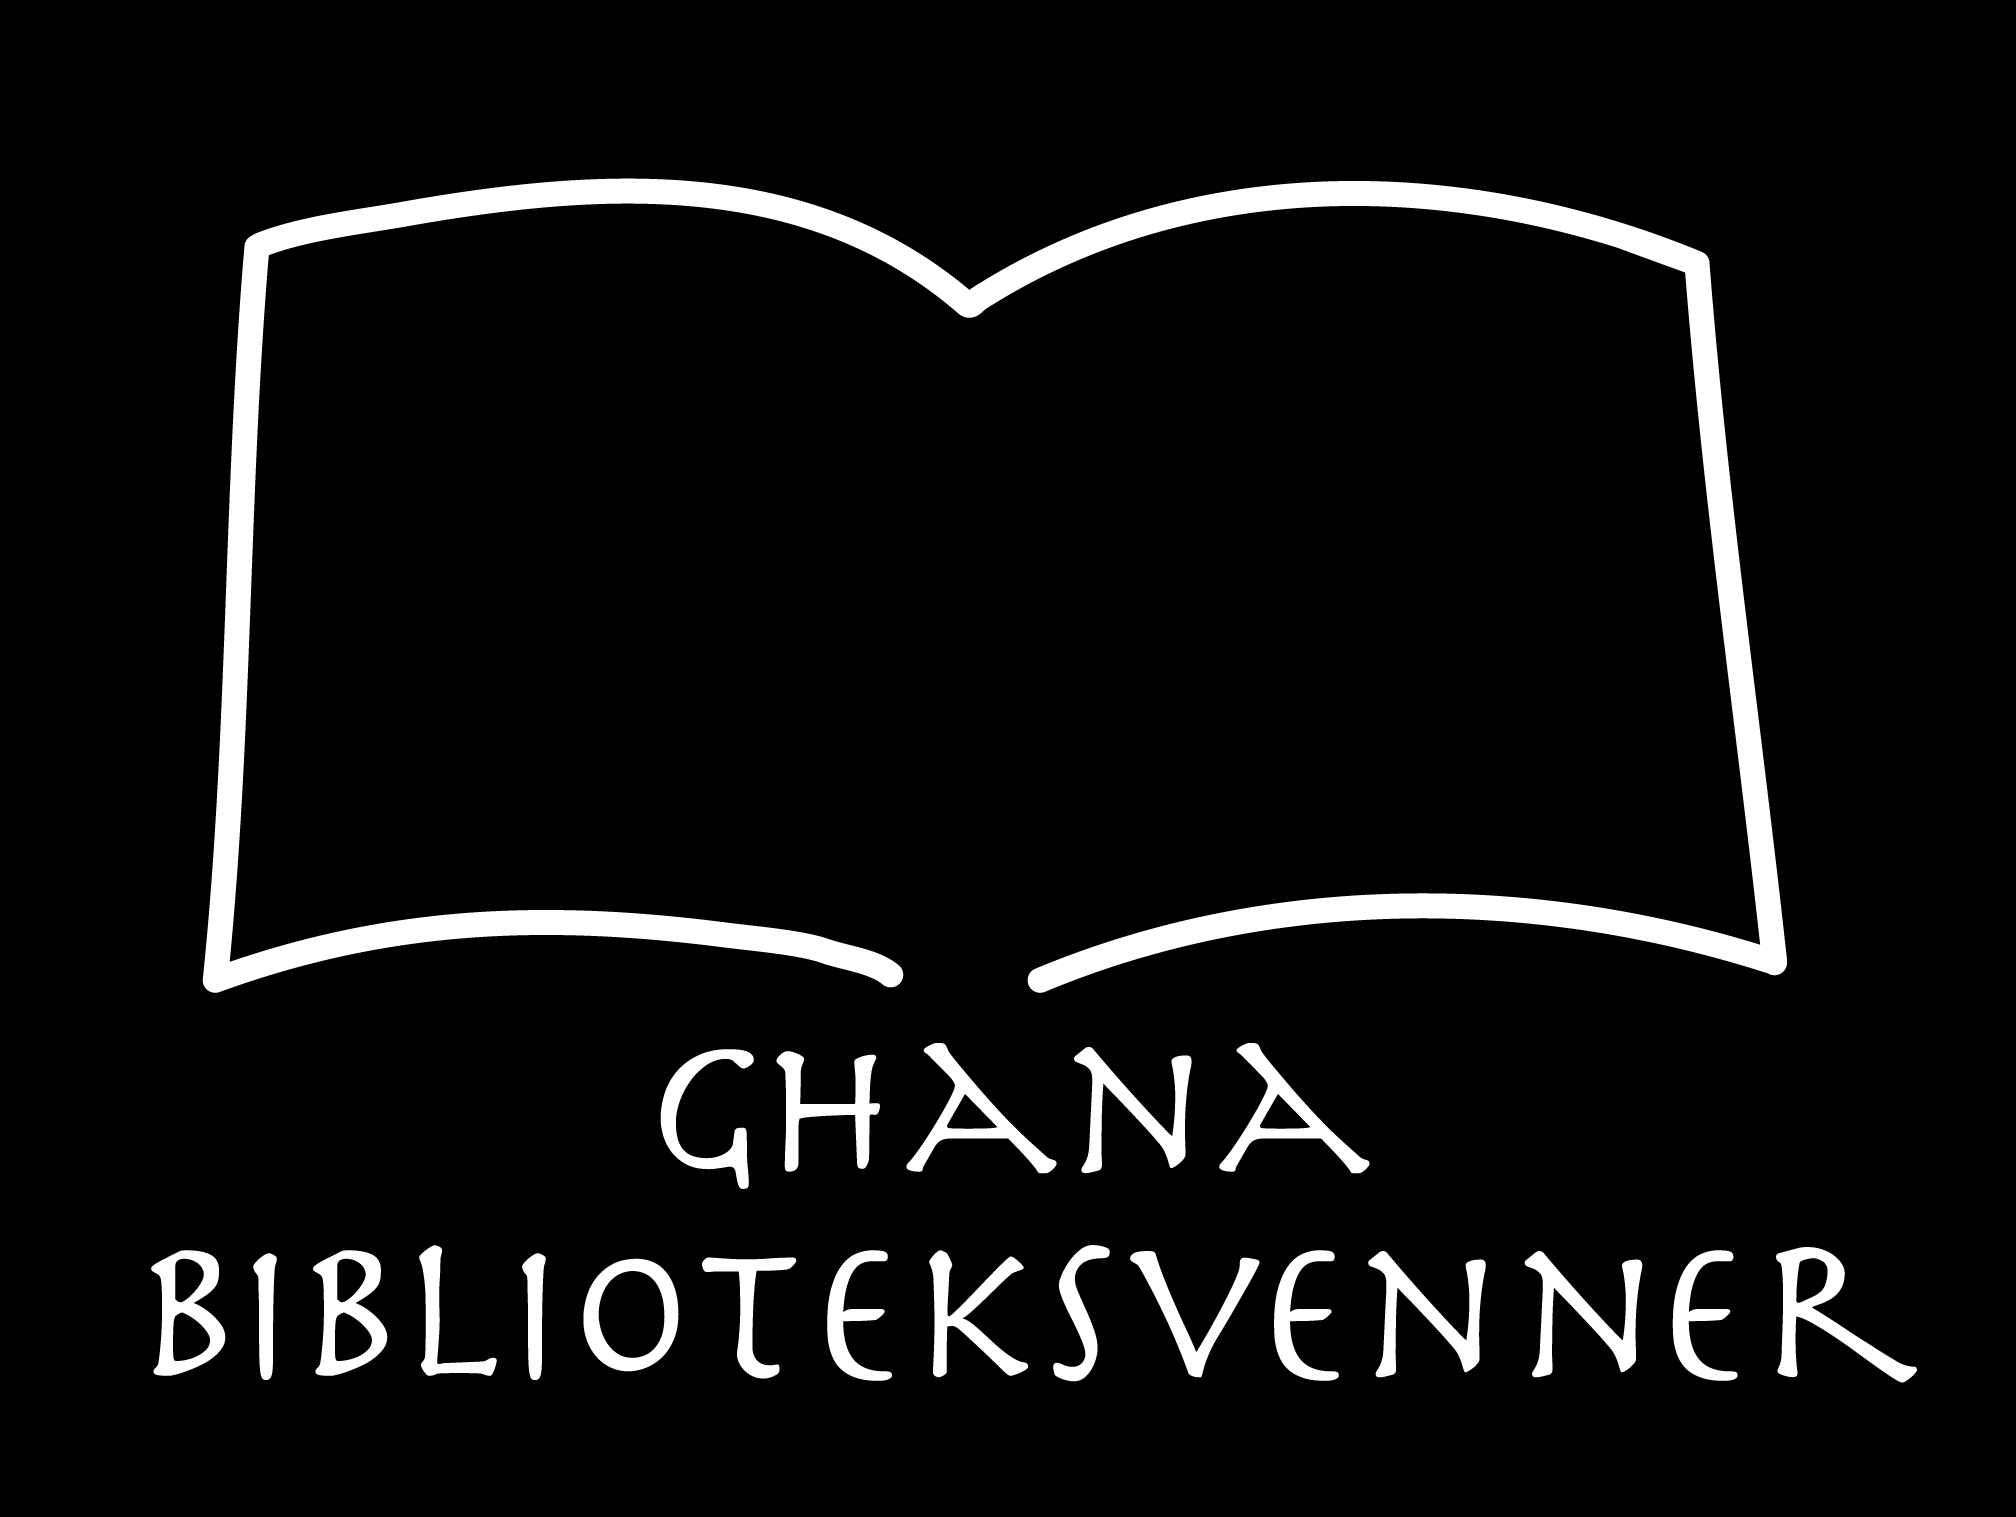 Ghana Biblioteksvenner